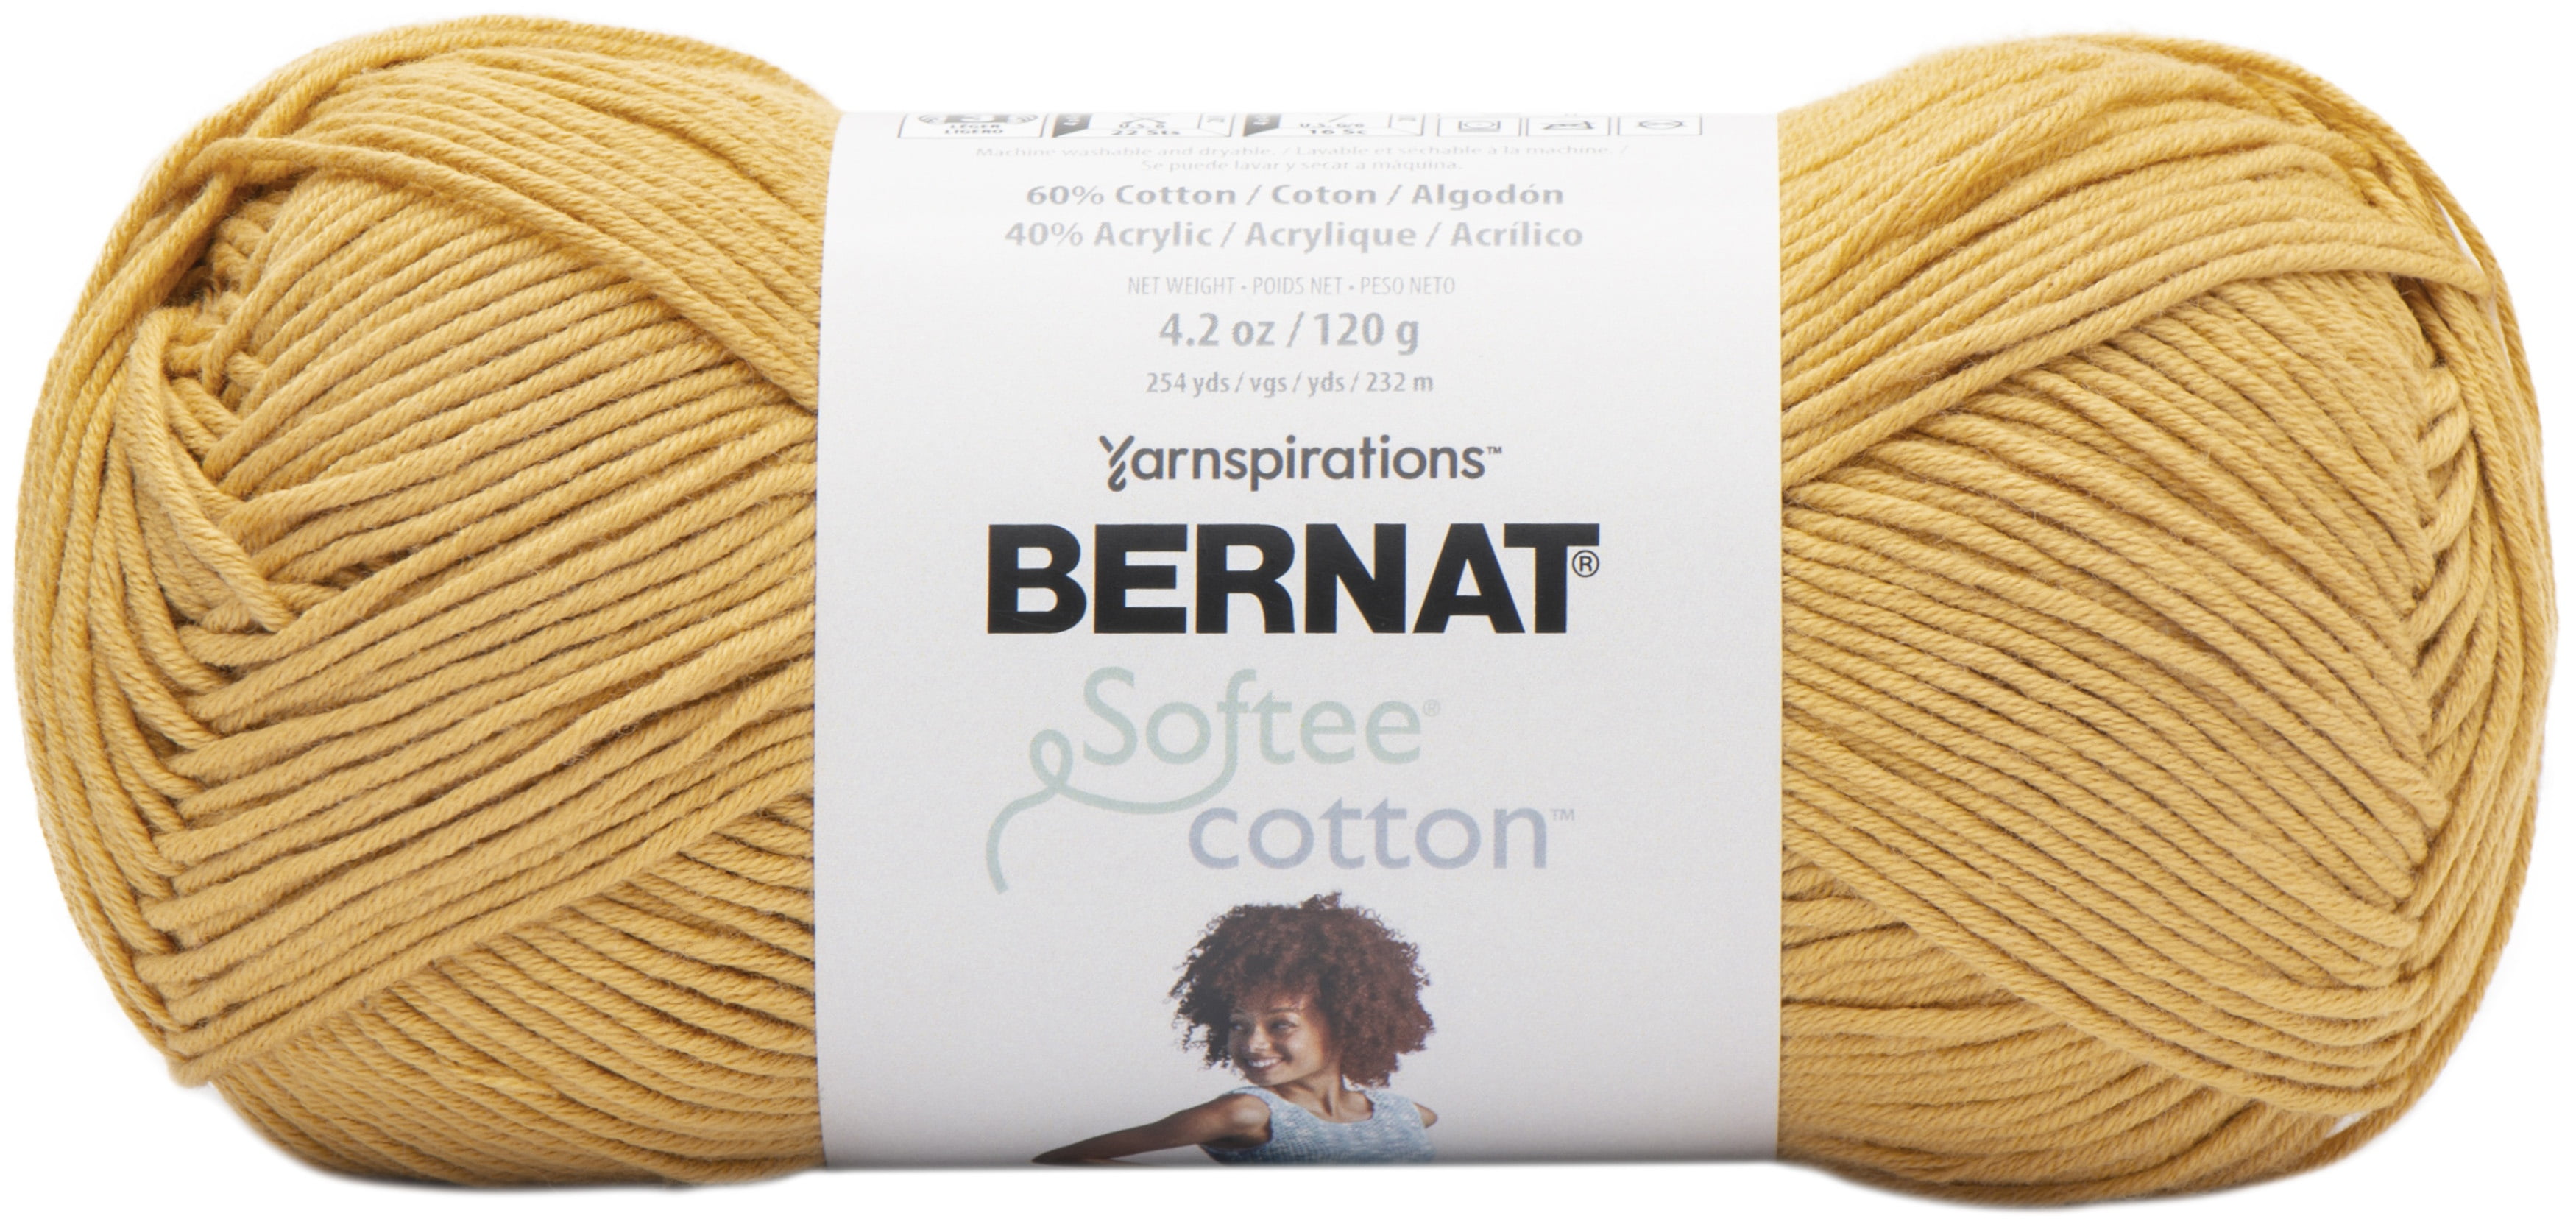 Bernat Softee Cotton Yarn - Warm Red